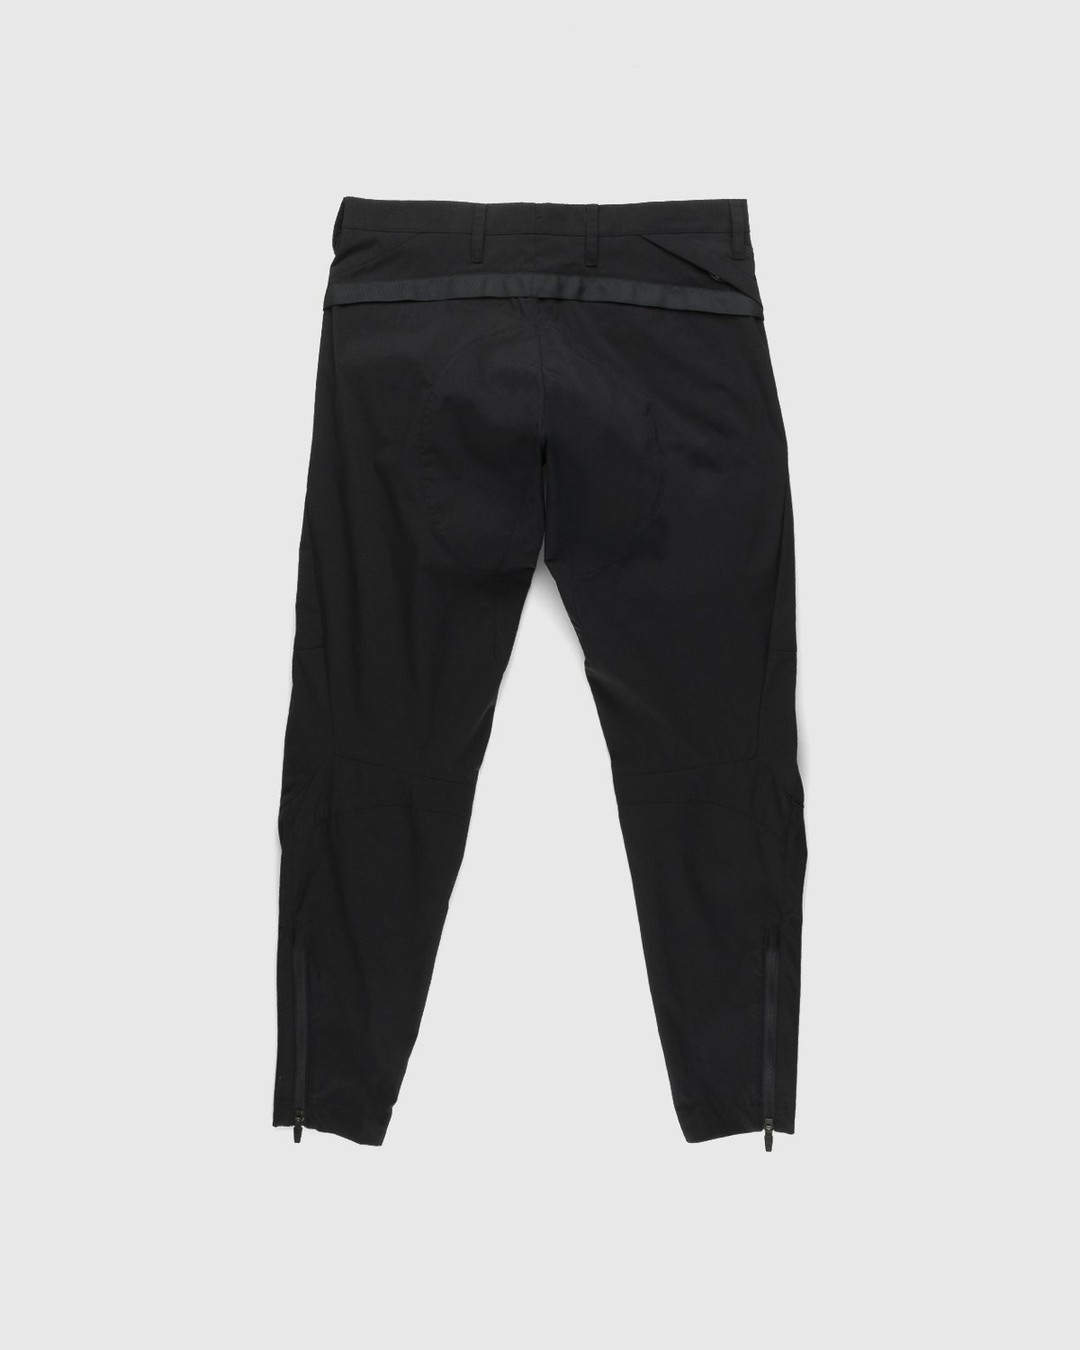 ACRONYM – P10-E Pant Black - Cargo Pants - Black - Image 2